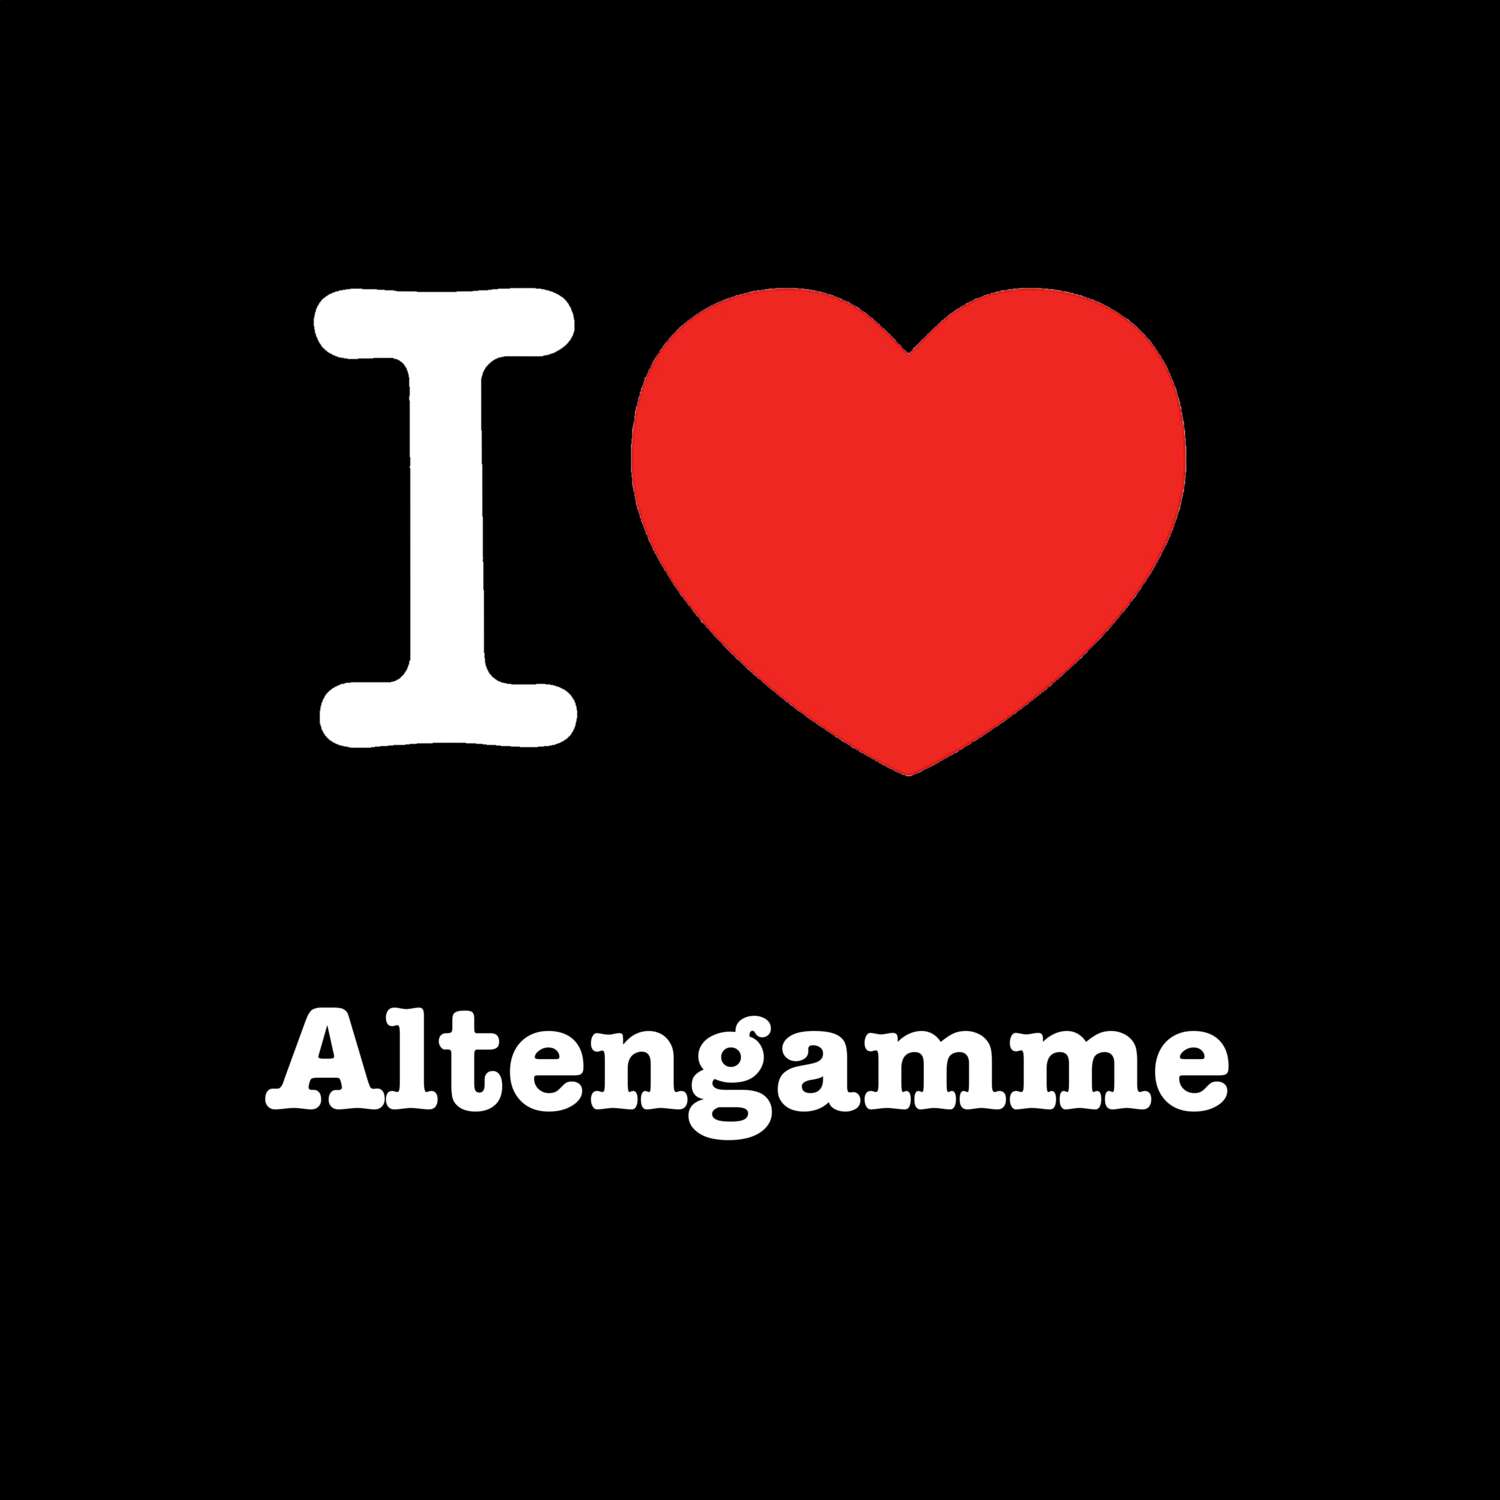 Altengamme T-Shirt »I love«